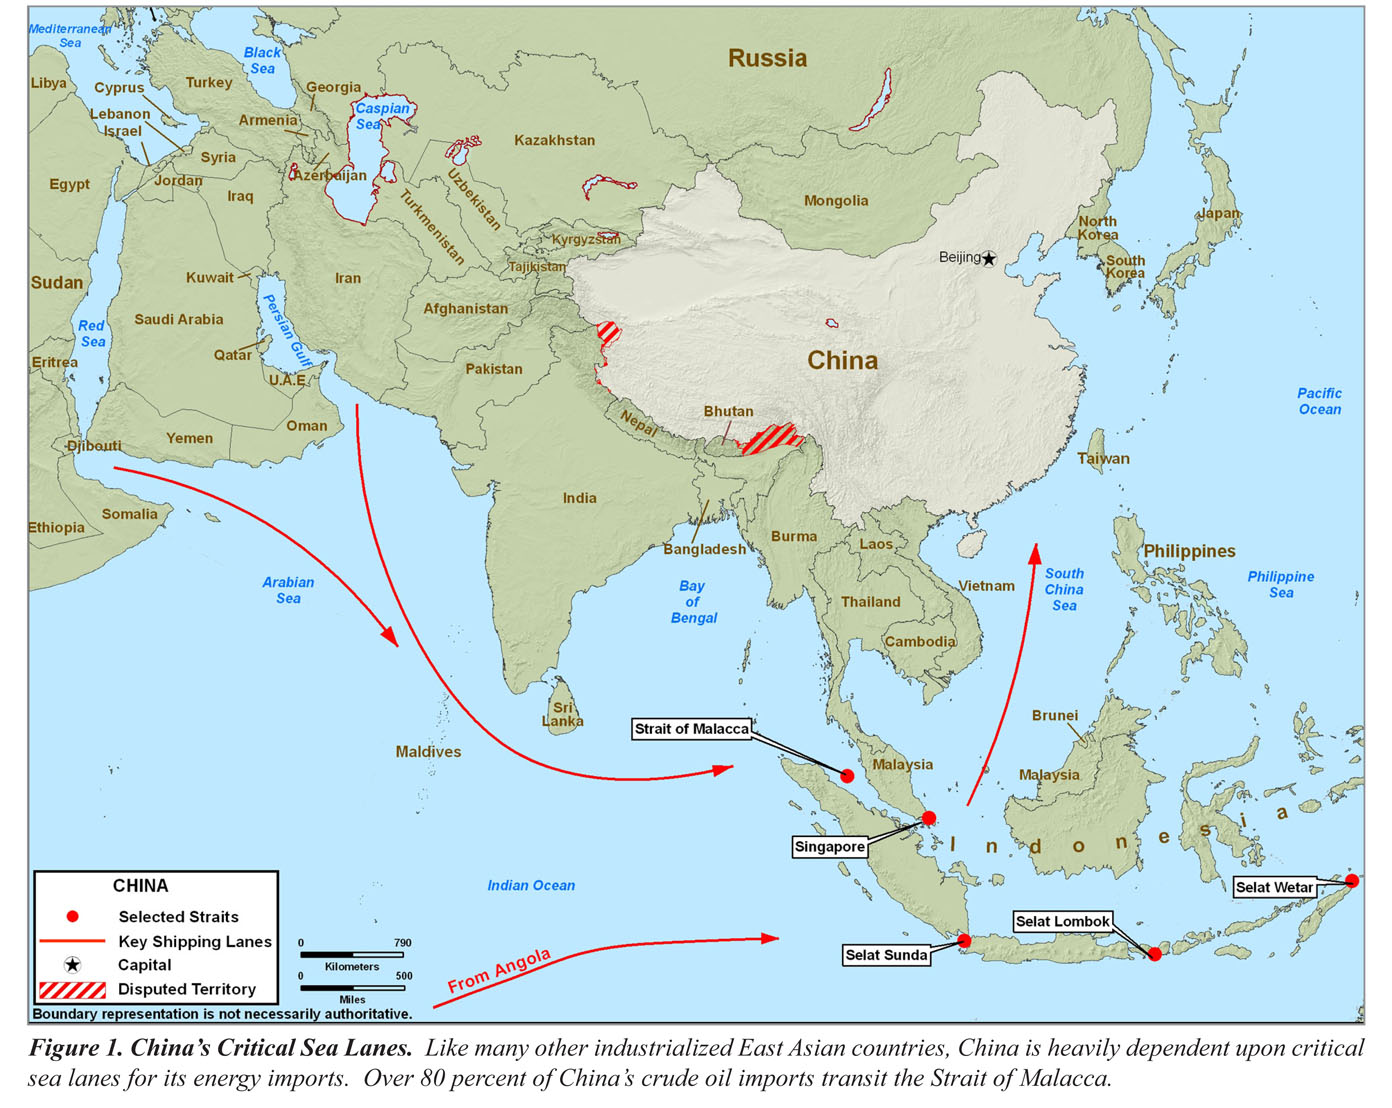 http://www.lib.utexas.edu/maps/middle_east_and_asia/china_critical_sea_lanes_2009.jpg